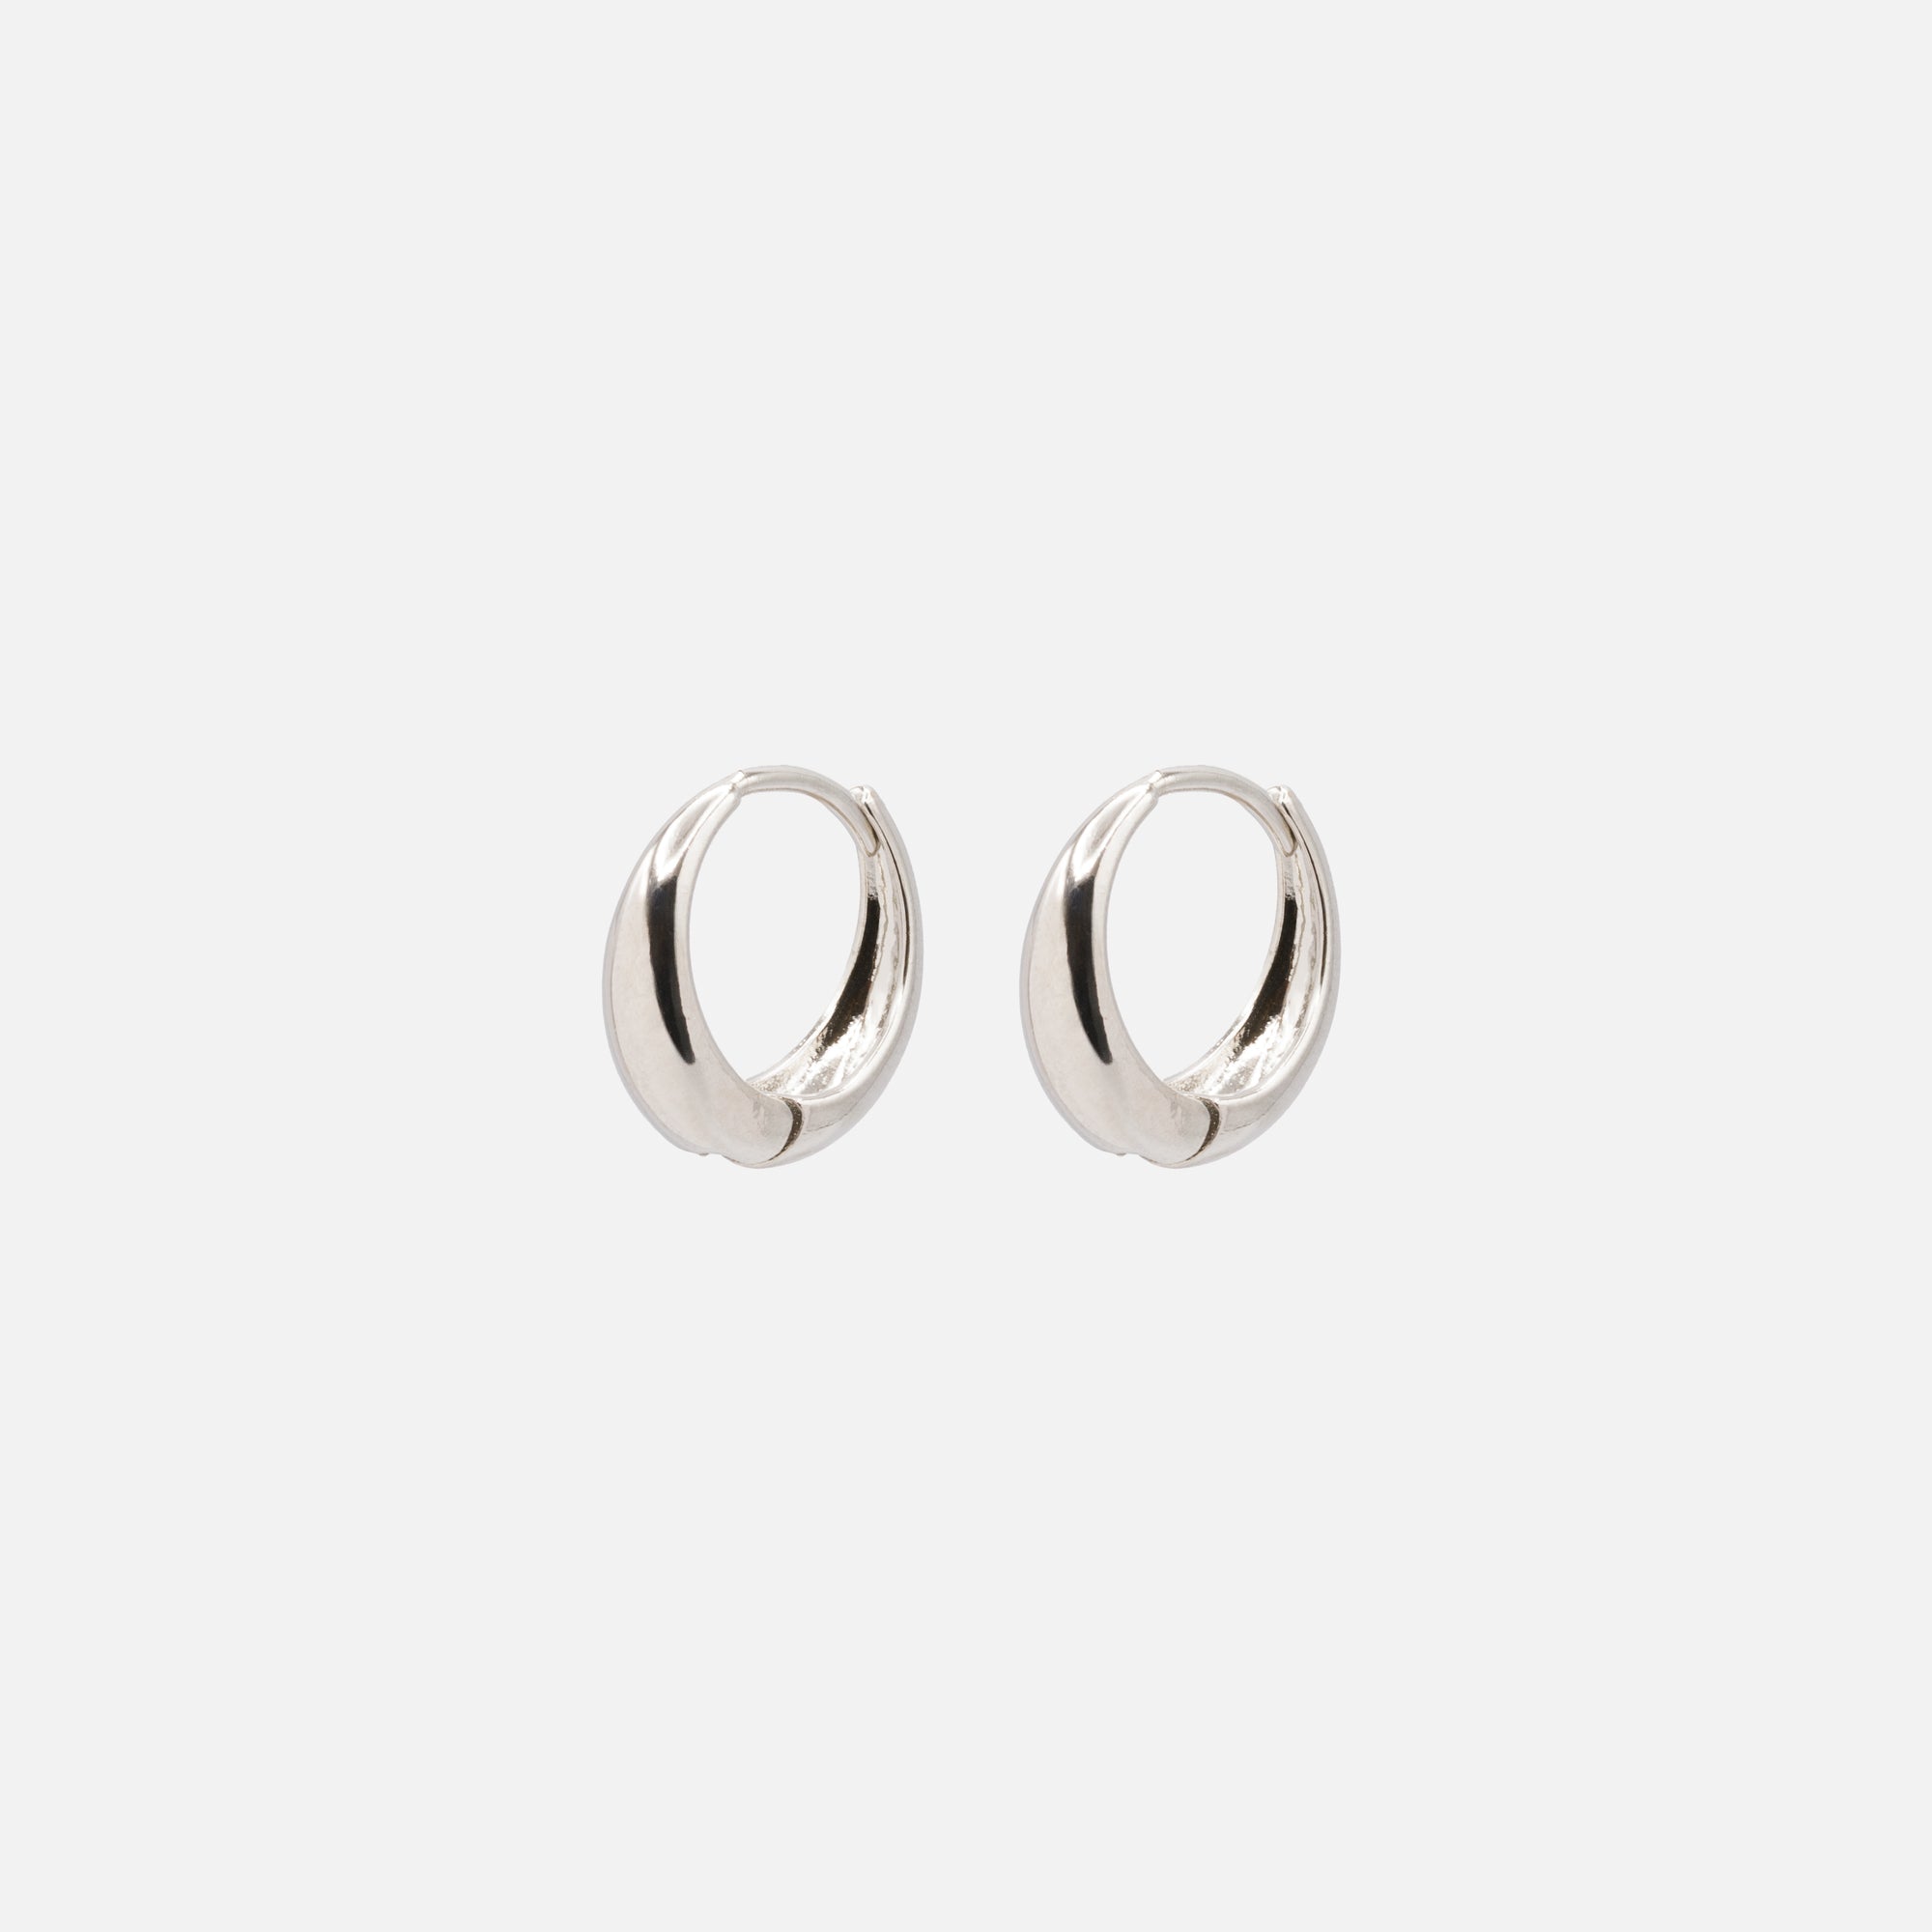 Wide base silver hoop earrings